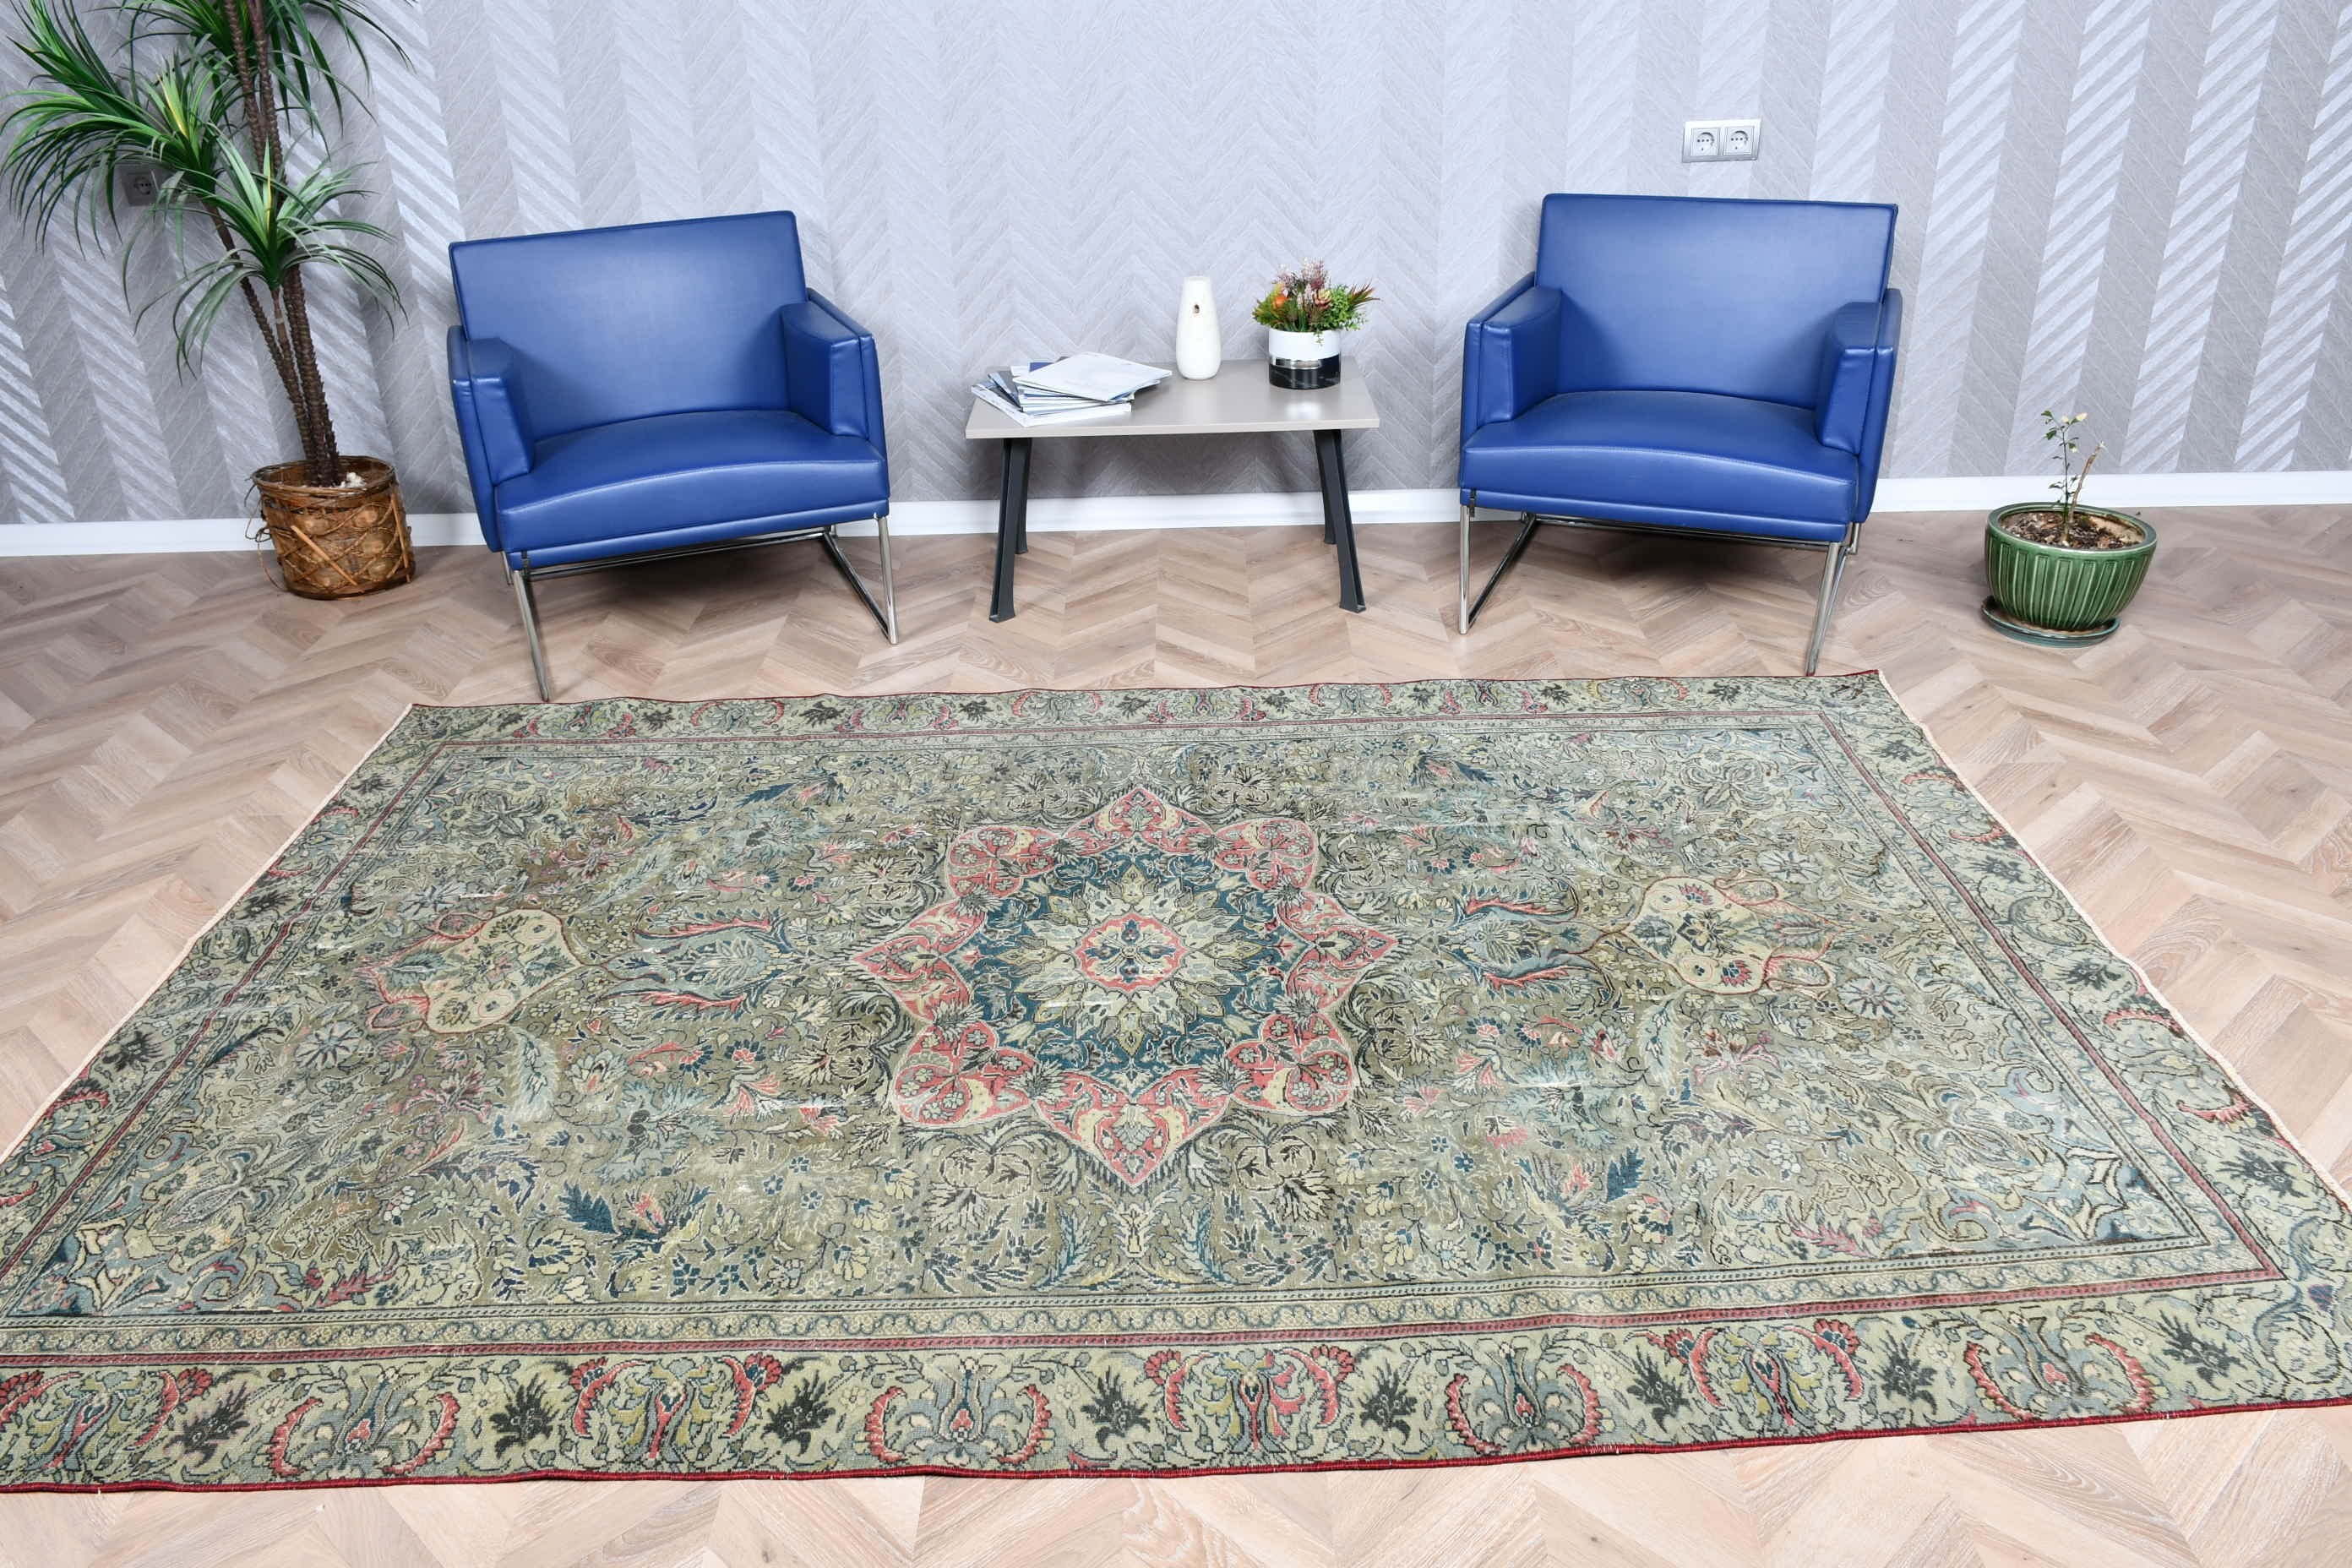 Home Decor Rug, Decorative Rugs, Green Floor Rugs, Dining Room Rug, Living Room Rug, Turkish Rugs, Wool Rug, 6x9 ft Large Rug, Vintage Rugs